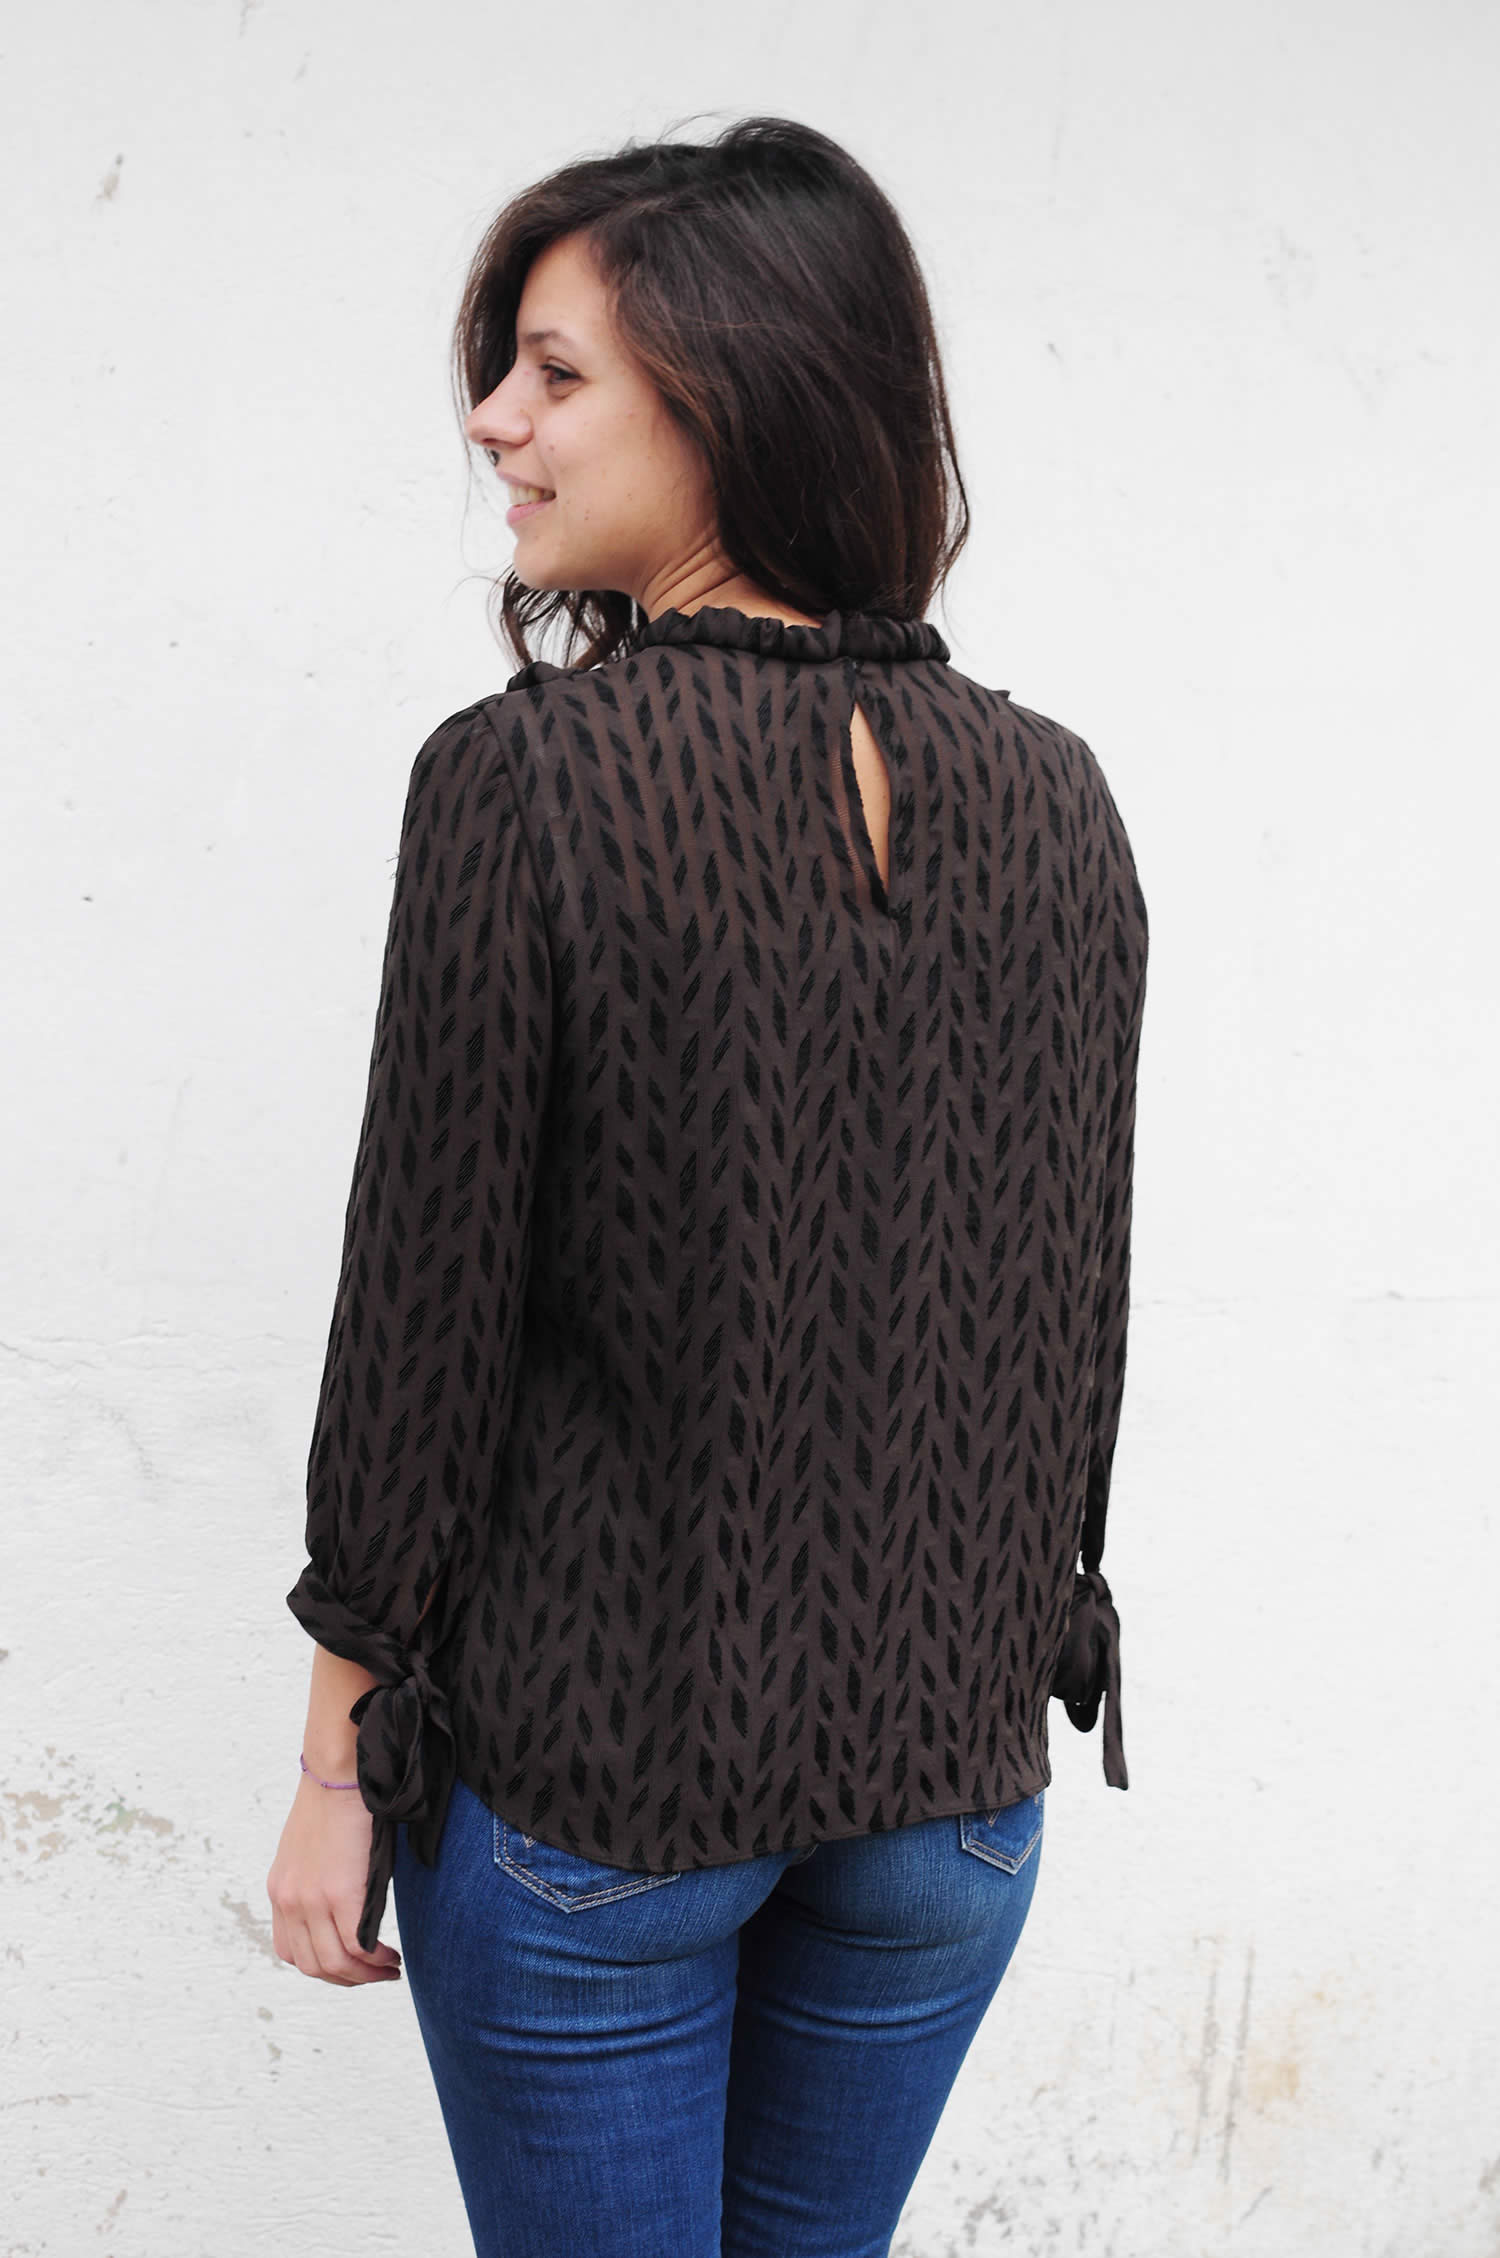 Ladulsatina - Sewing blog - Blog di cucito - Jolanda blusa by Atelier Vicolo n 6 in silk viscose blend - Back detail